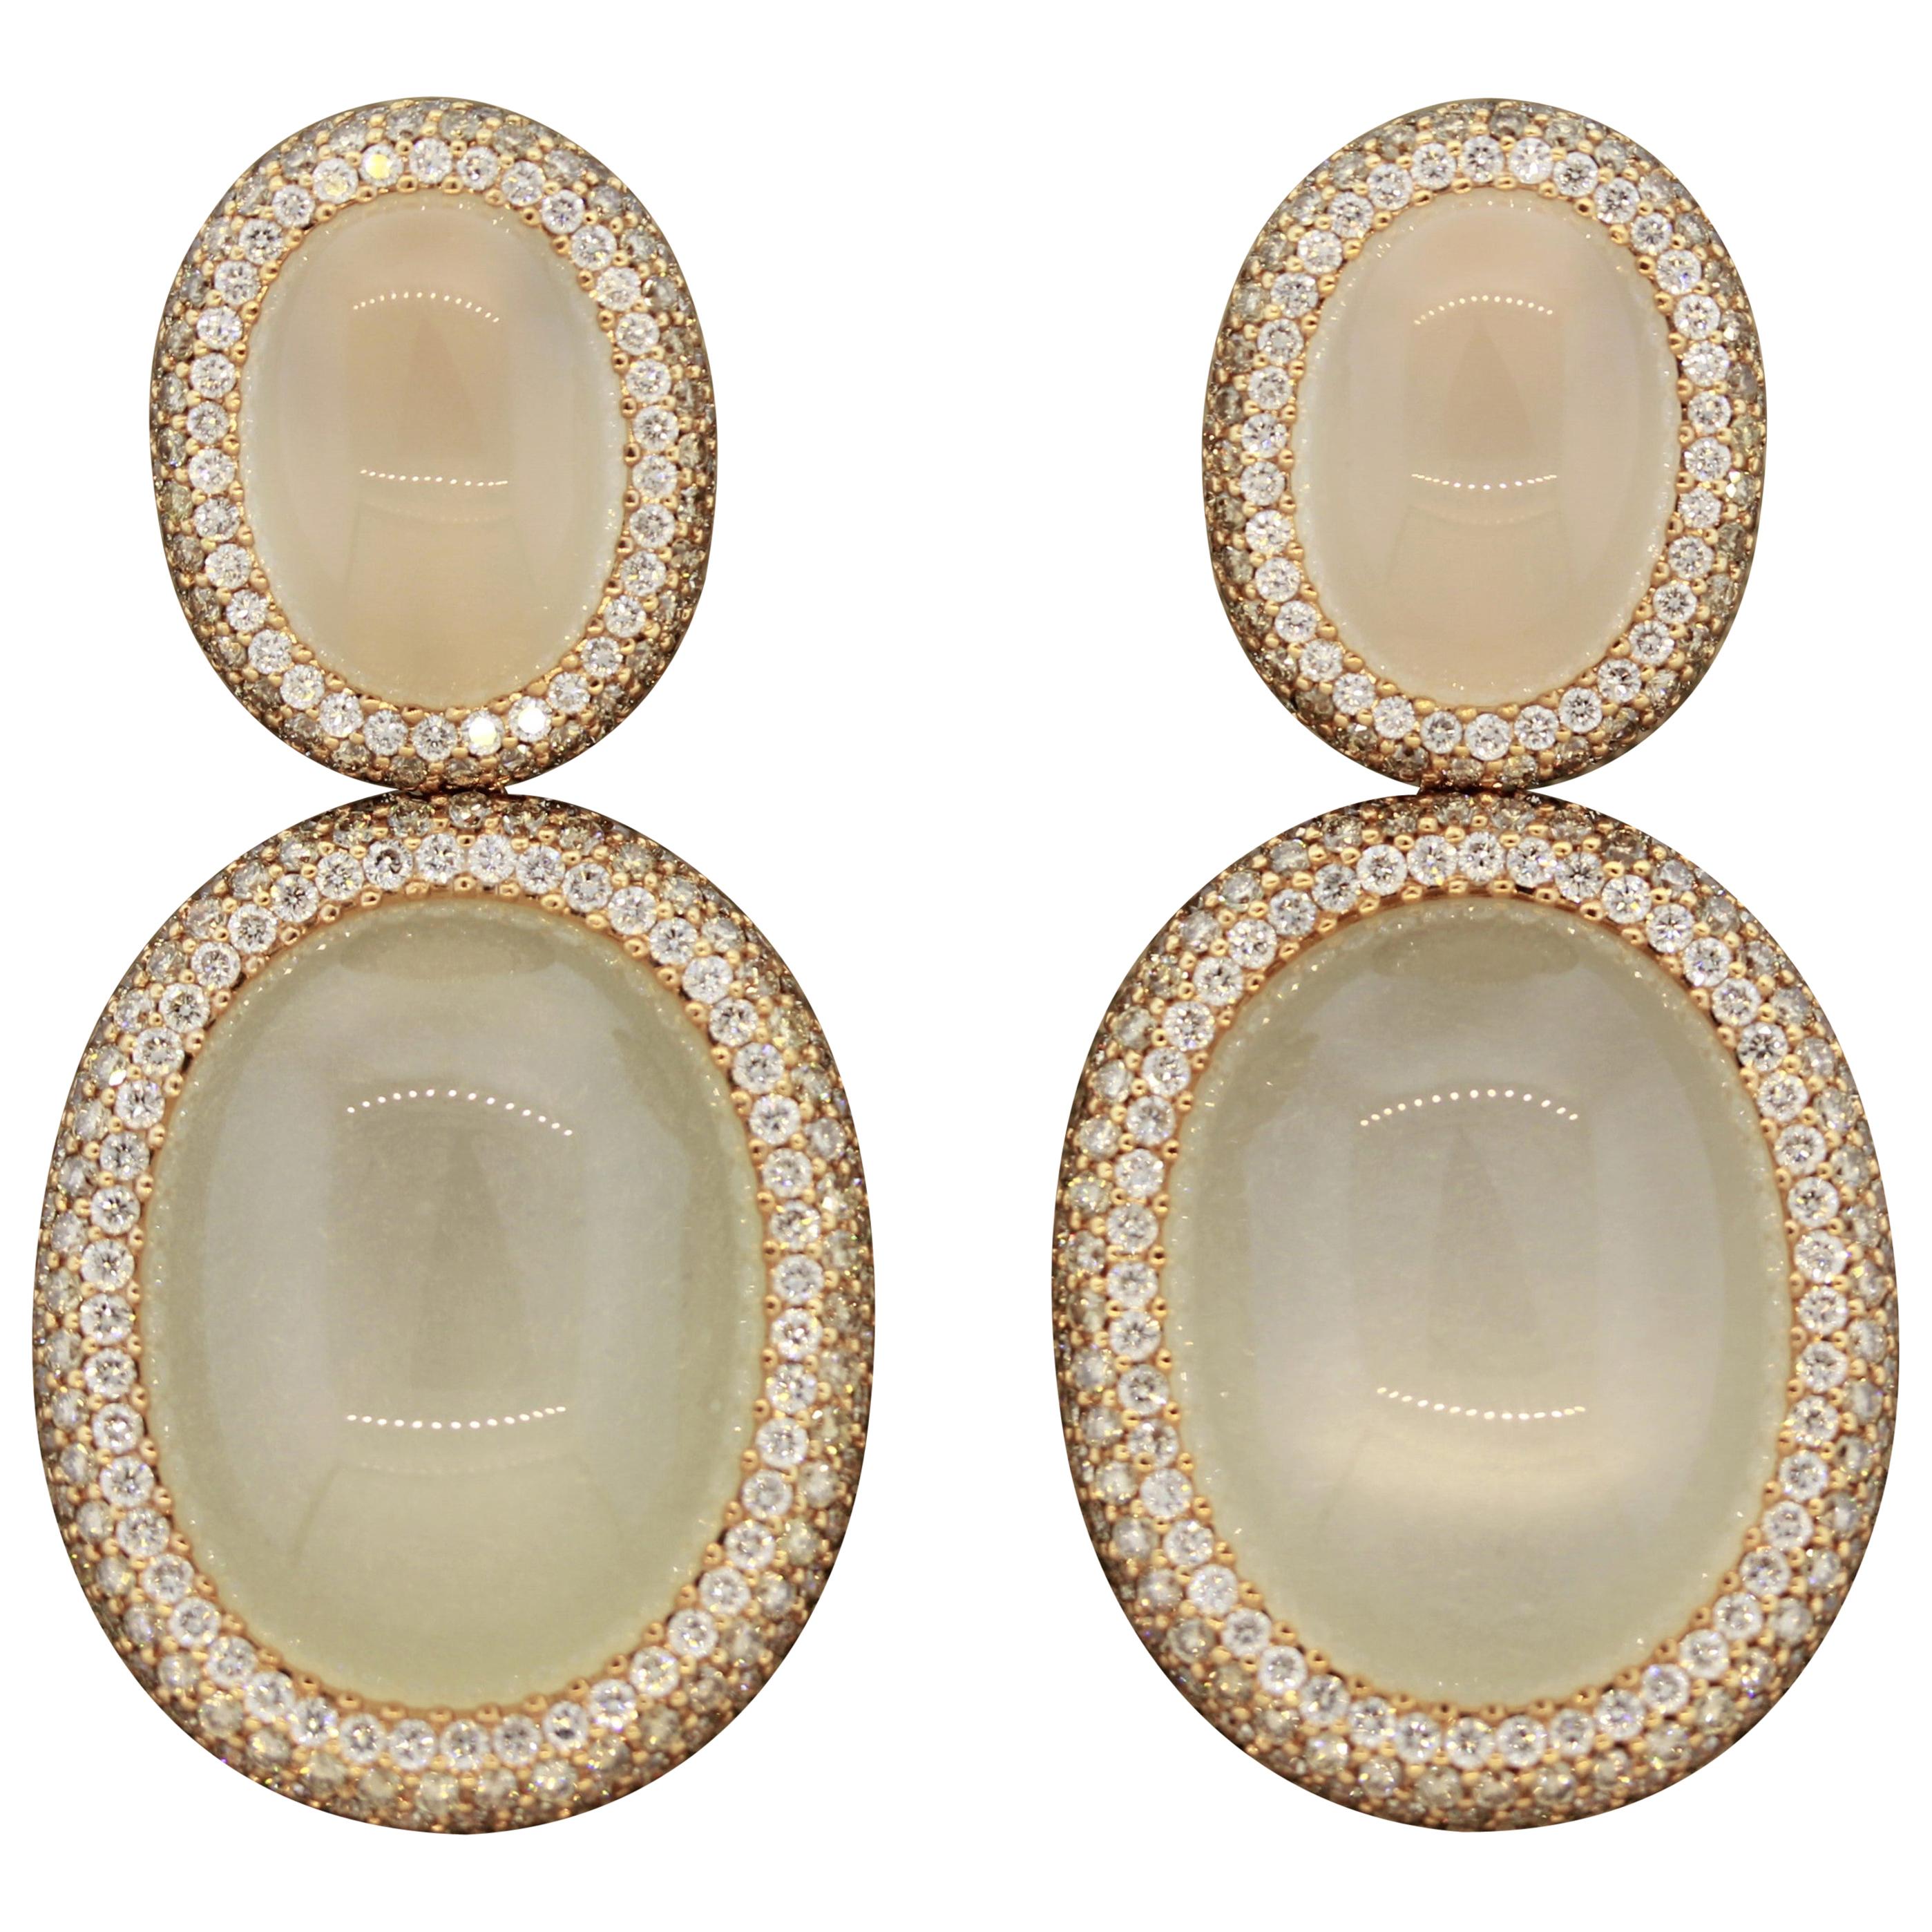 Moonstone Diamond Gold Drop Earrings For Sale